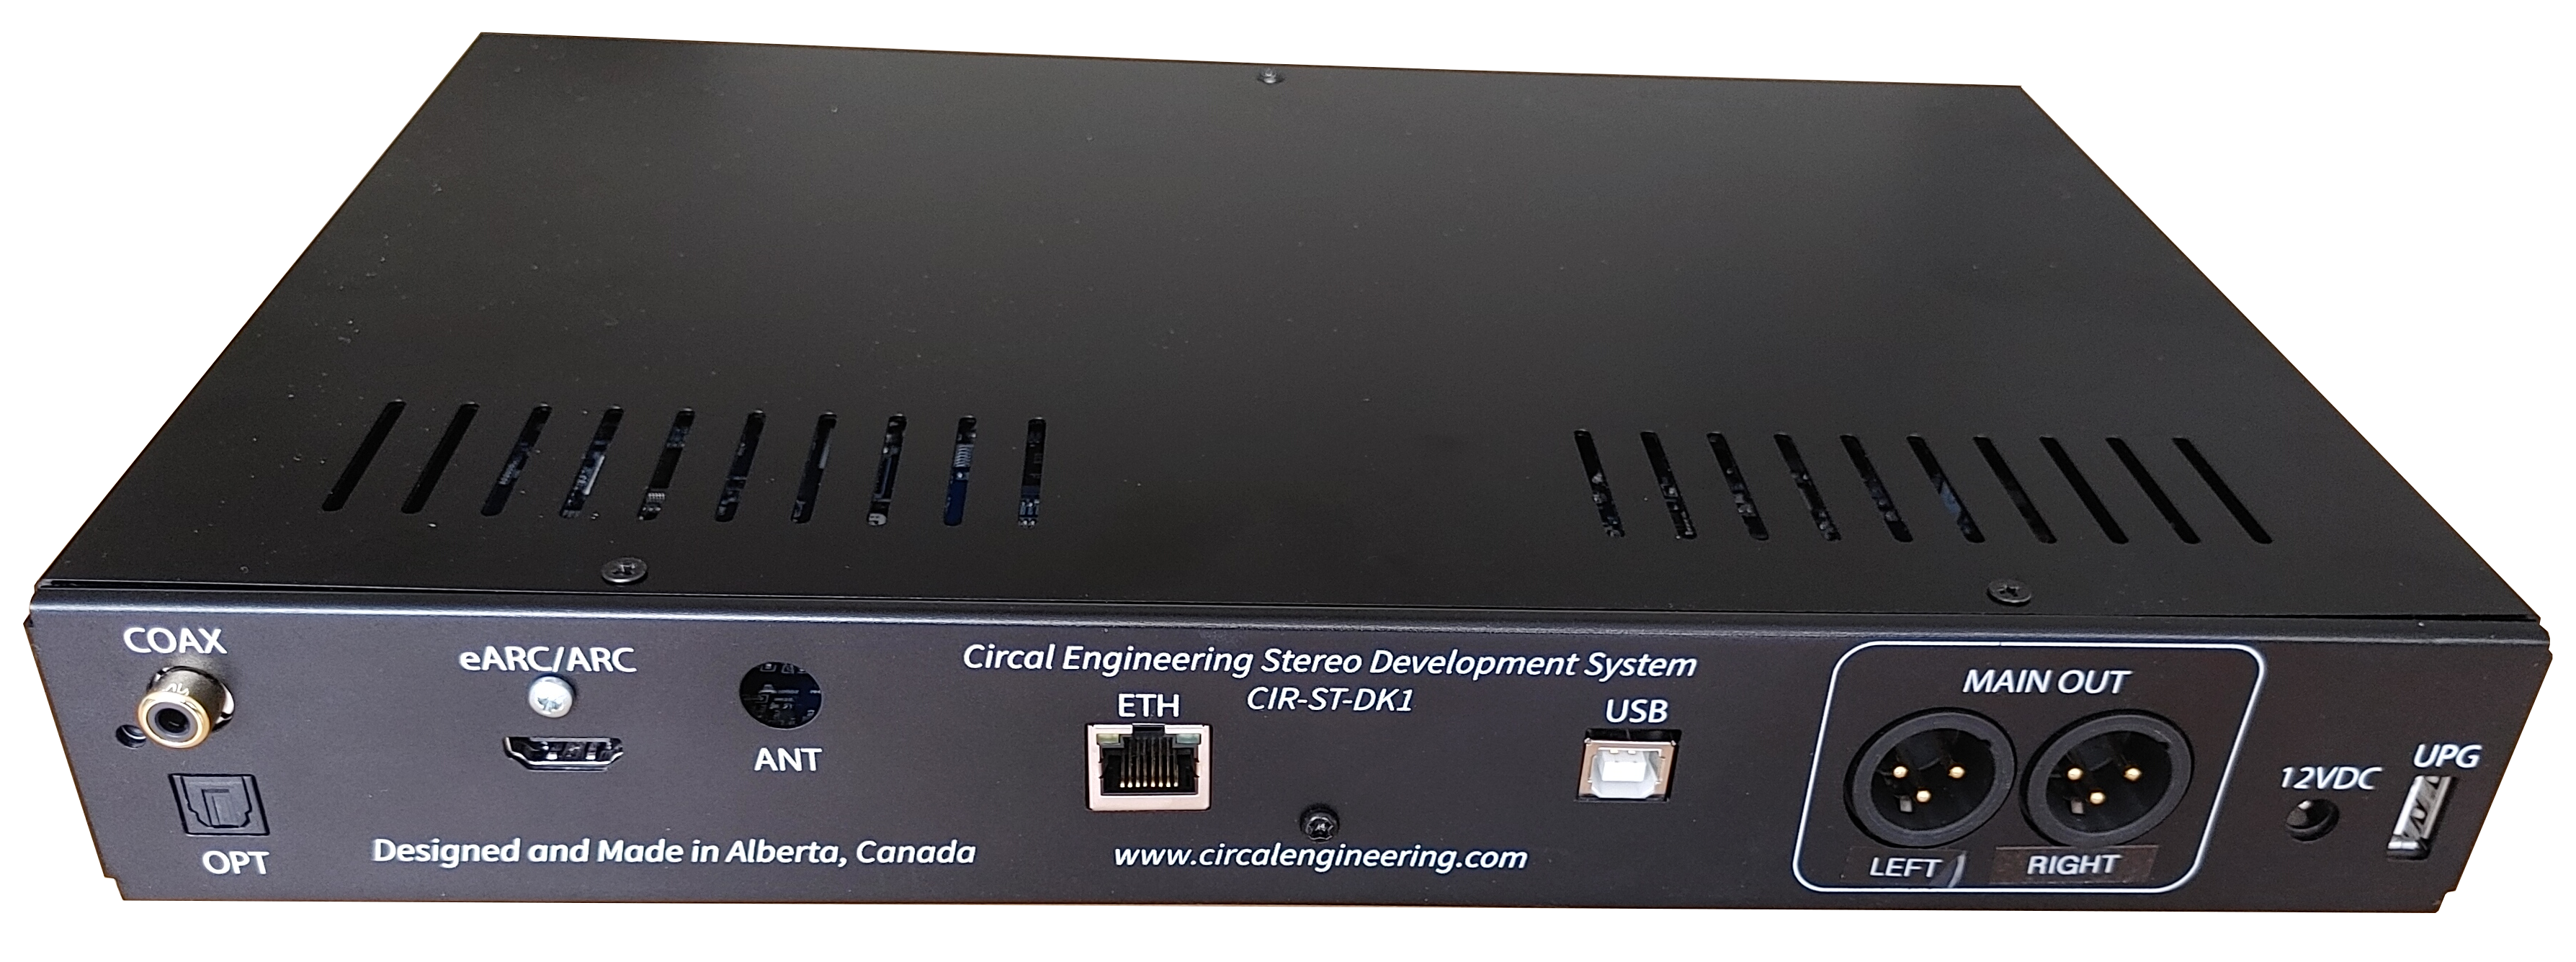 Stereo Development System